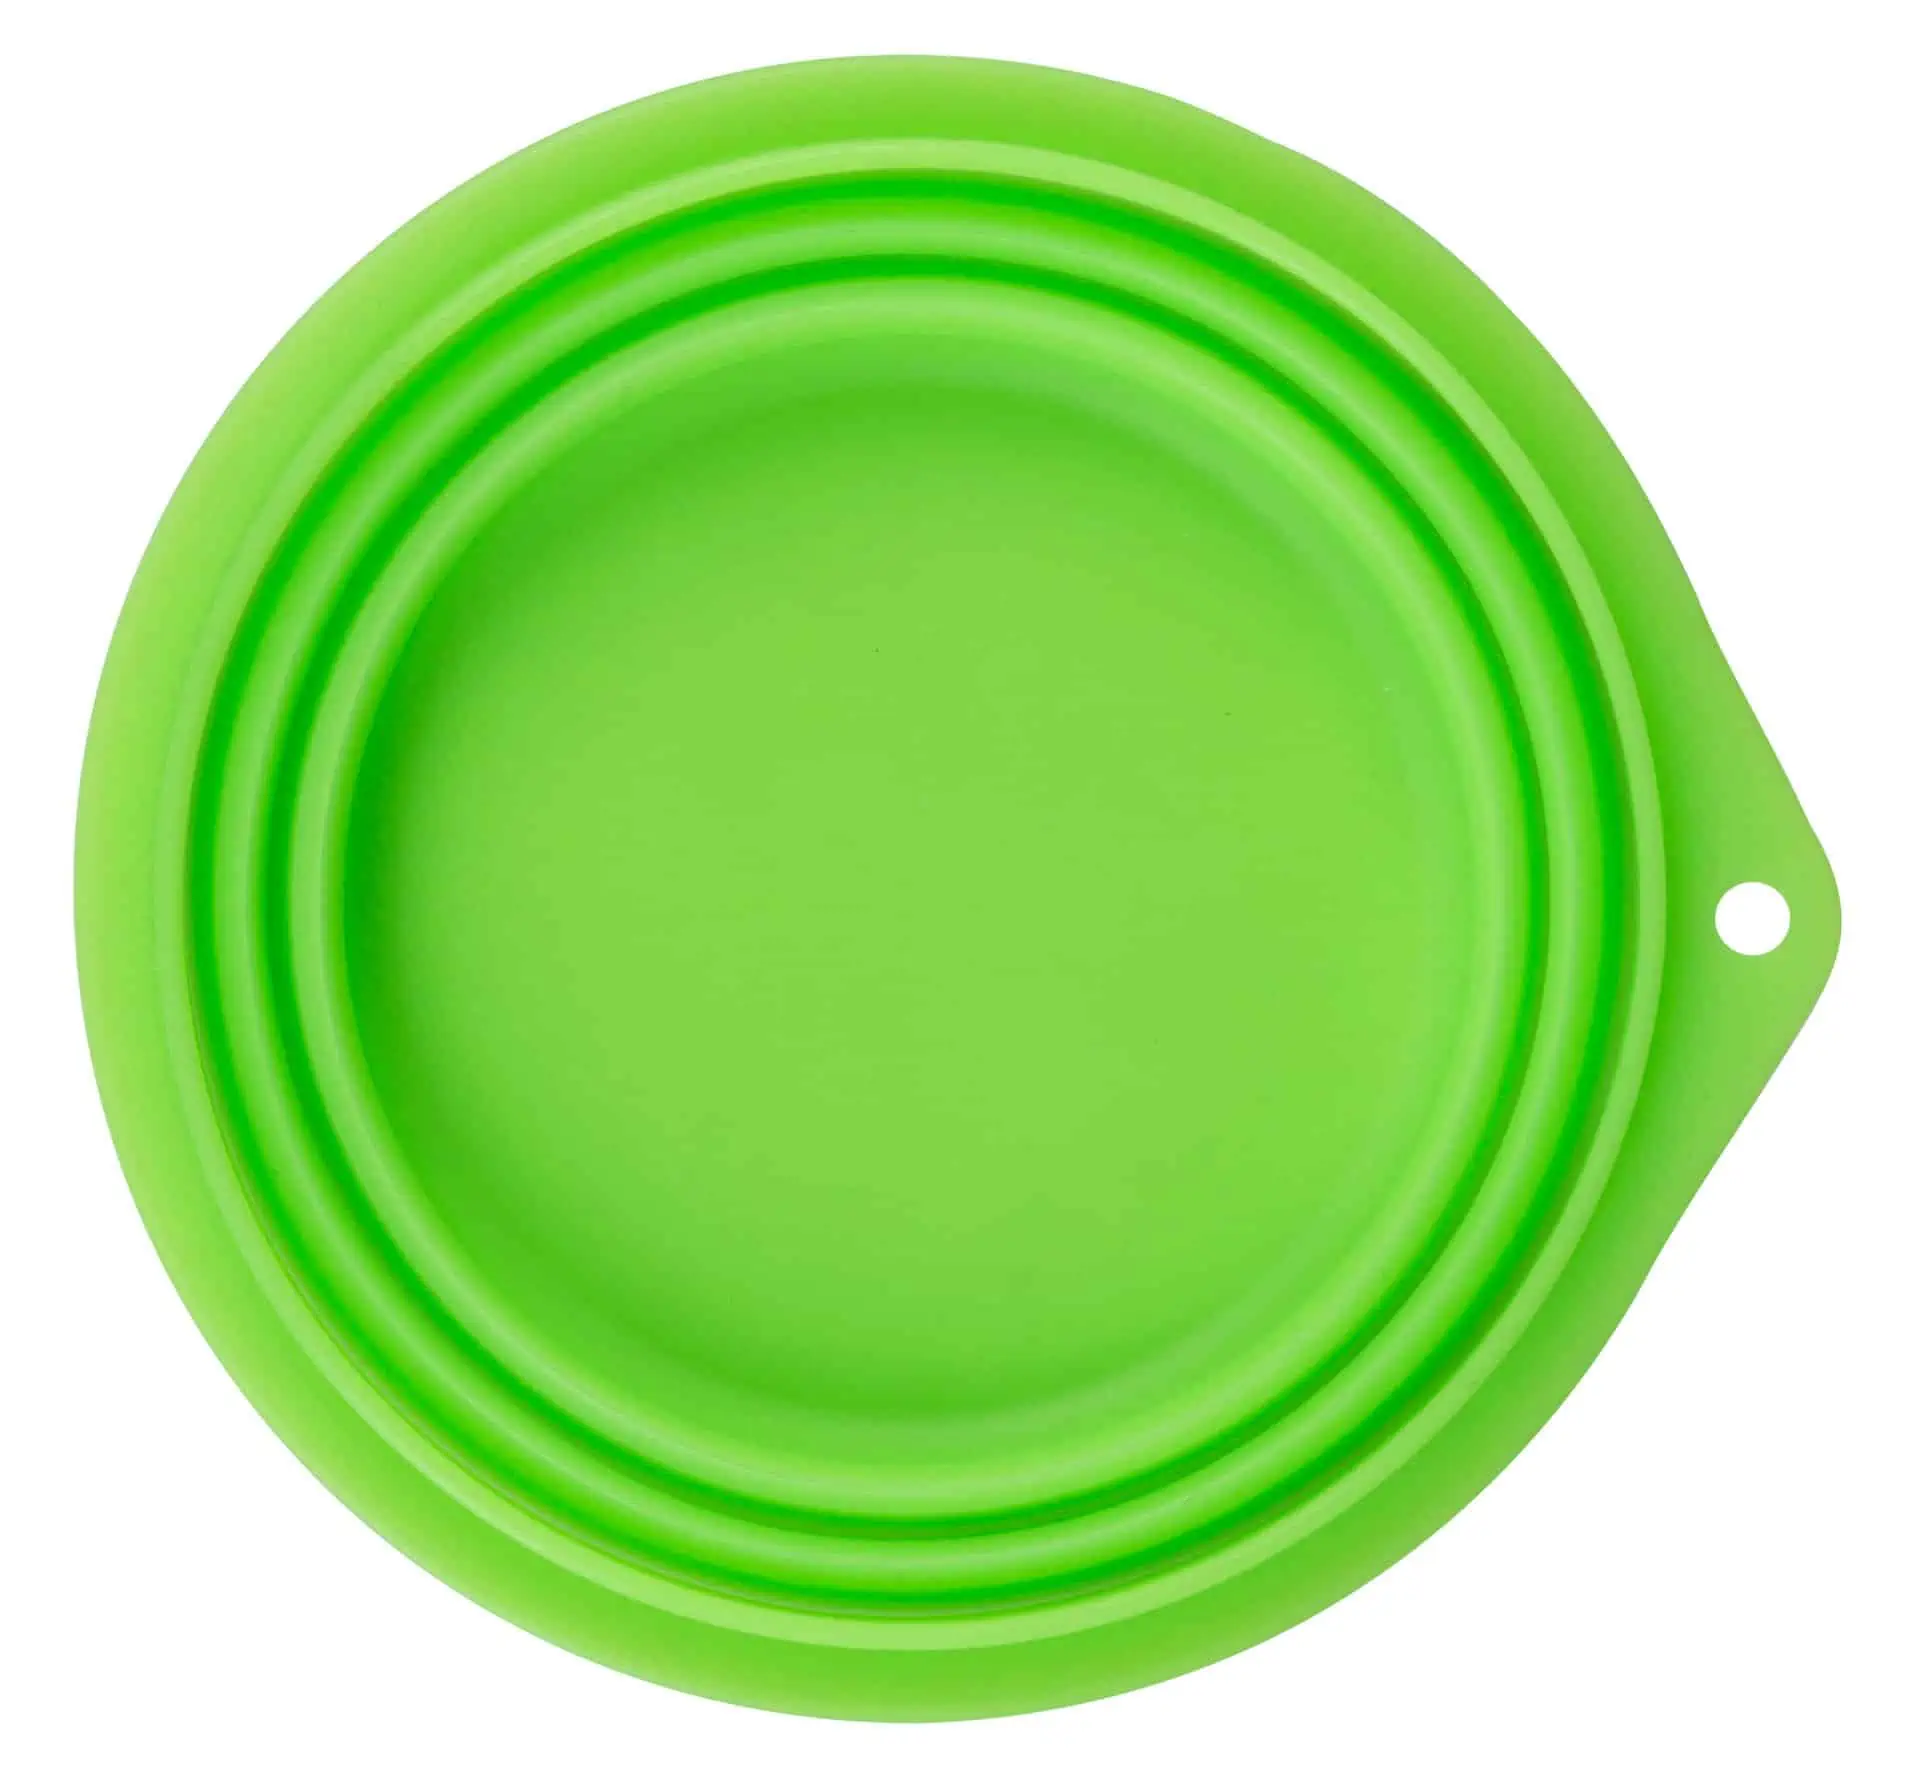 Silicon travel bowl (foldable) 1000ml, green